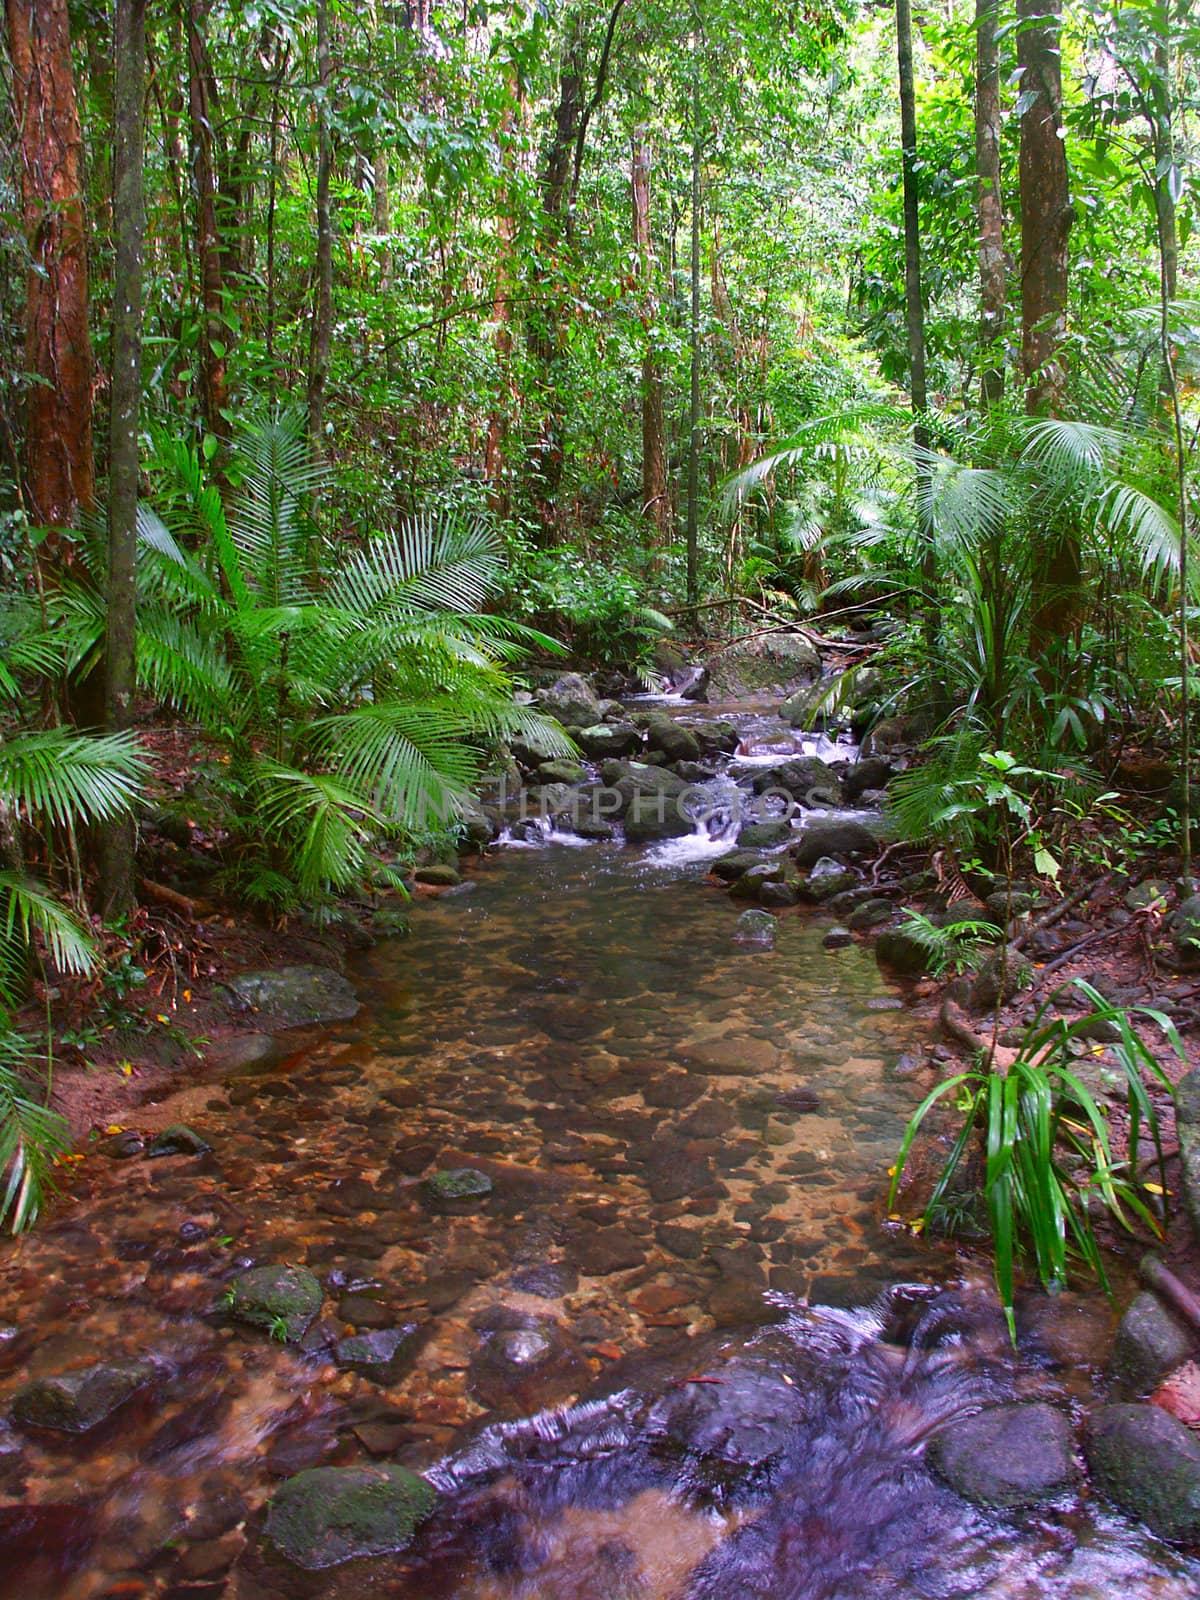 Daintree Rainforest - Queensland, Australia by Wirepec